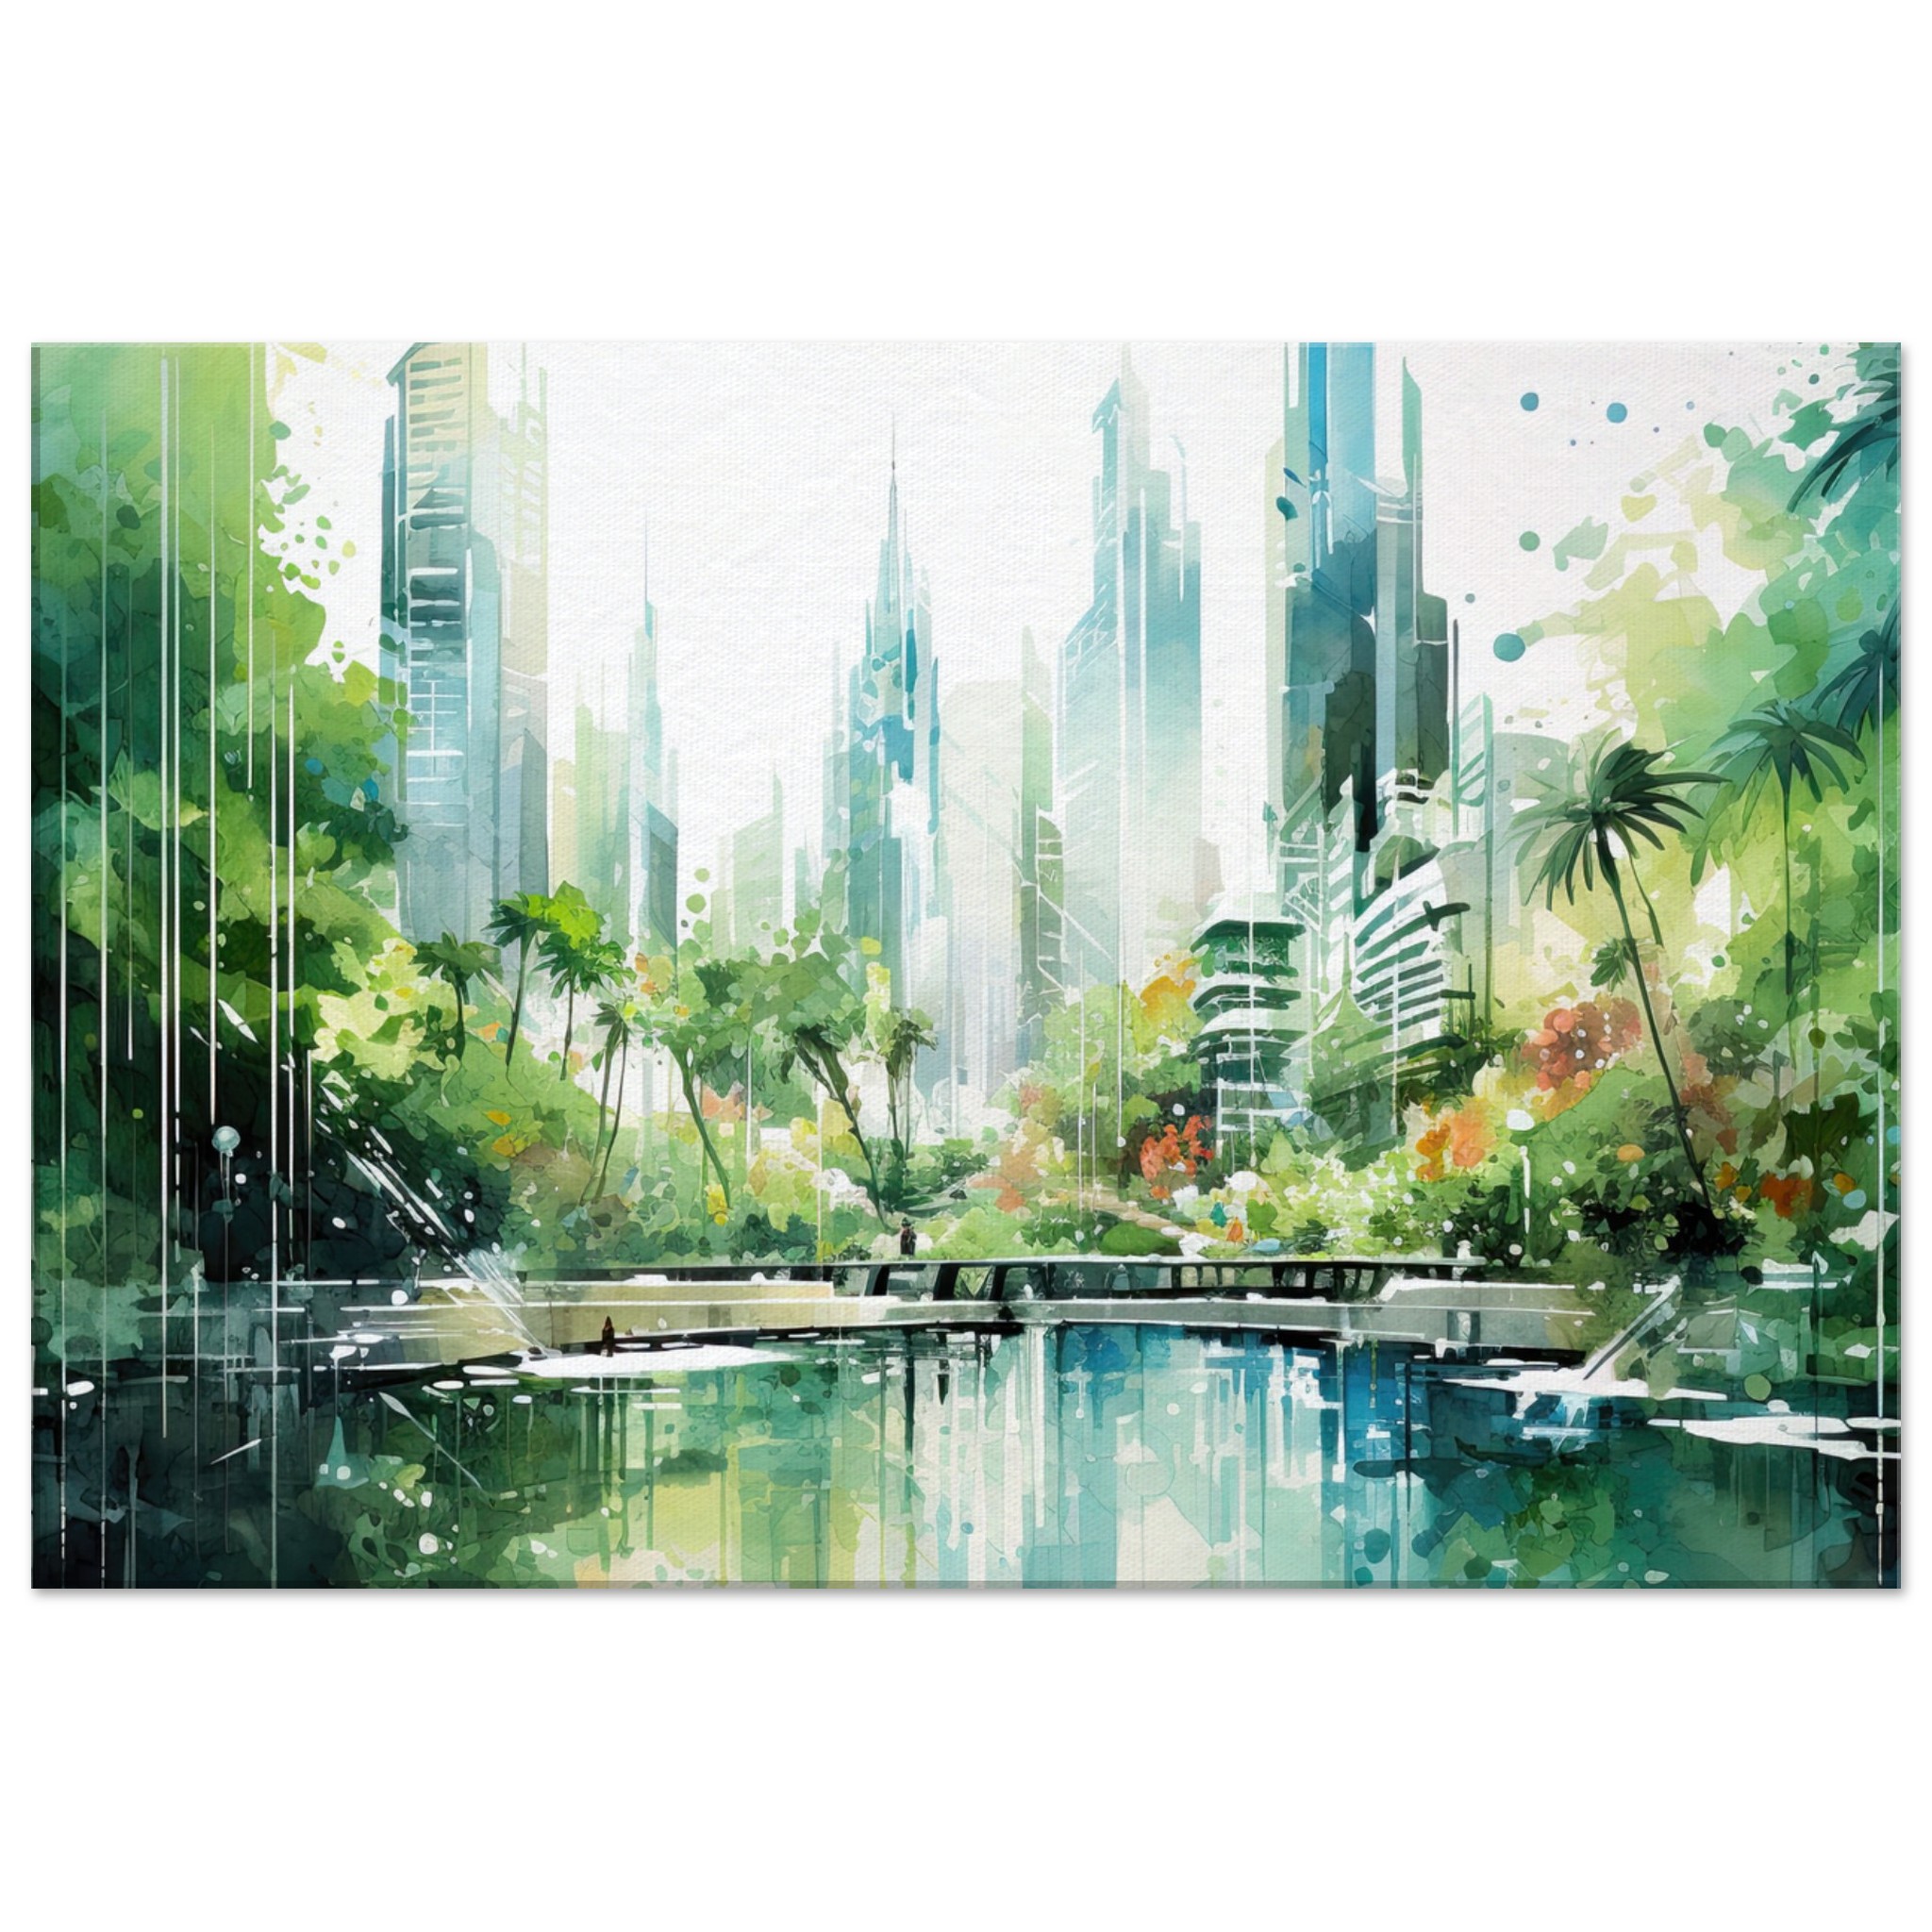 Rainy City Day Watercolor Canvas Print – 50×75 cm / 20×30″, Slim